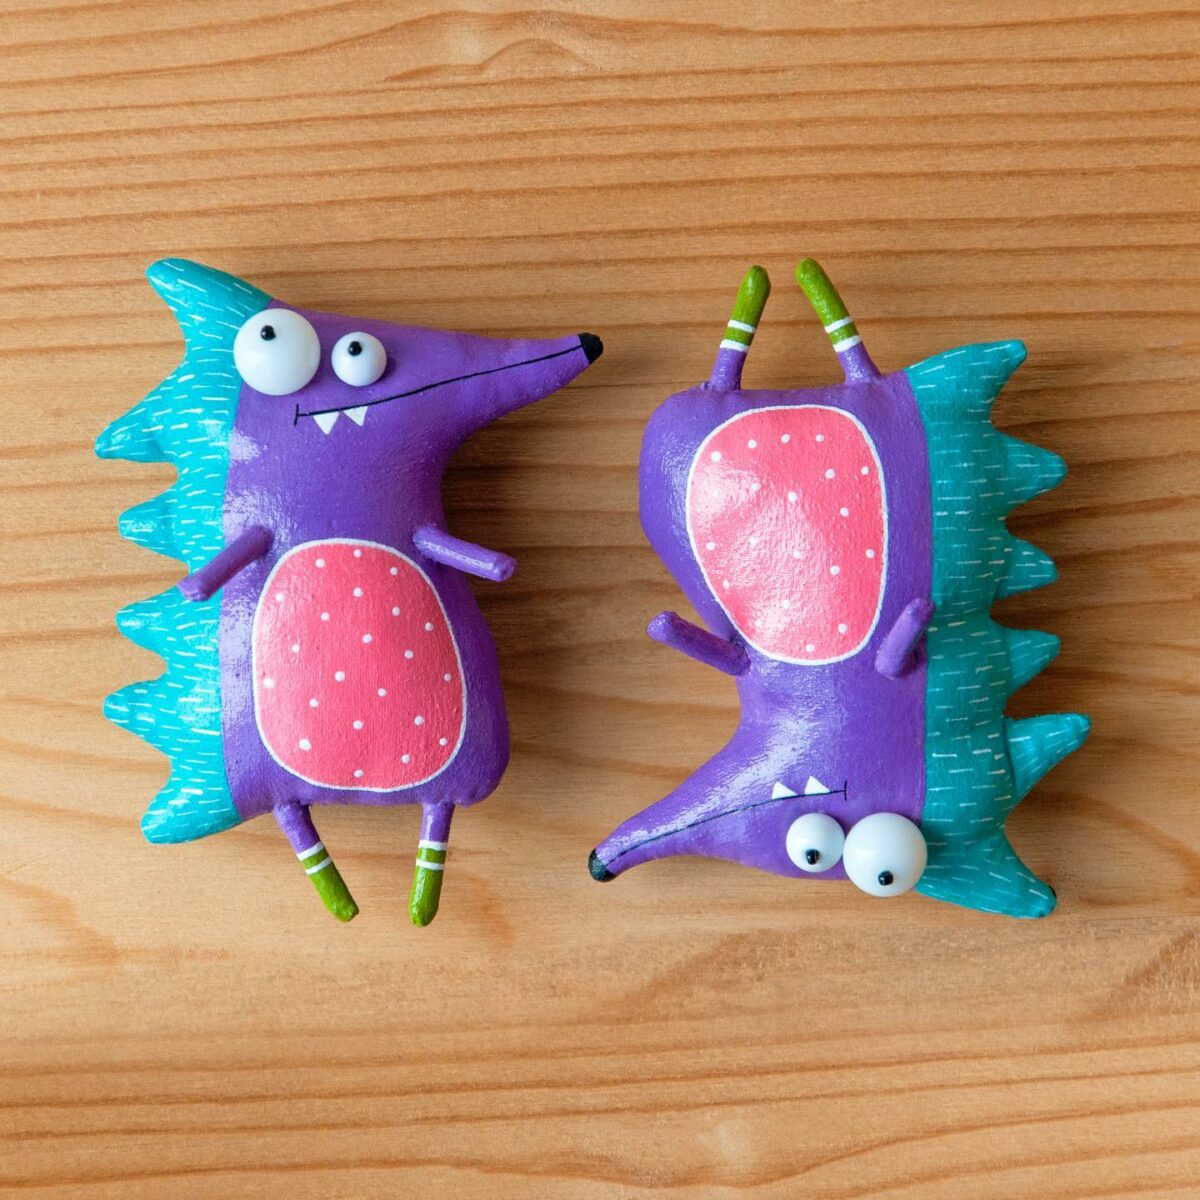 Colorful Handmade Toys Of Quirky Creatures By Lidiya Marinchuk (12)